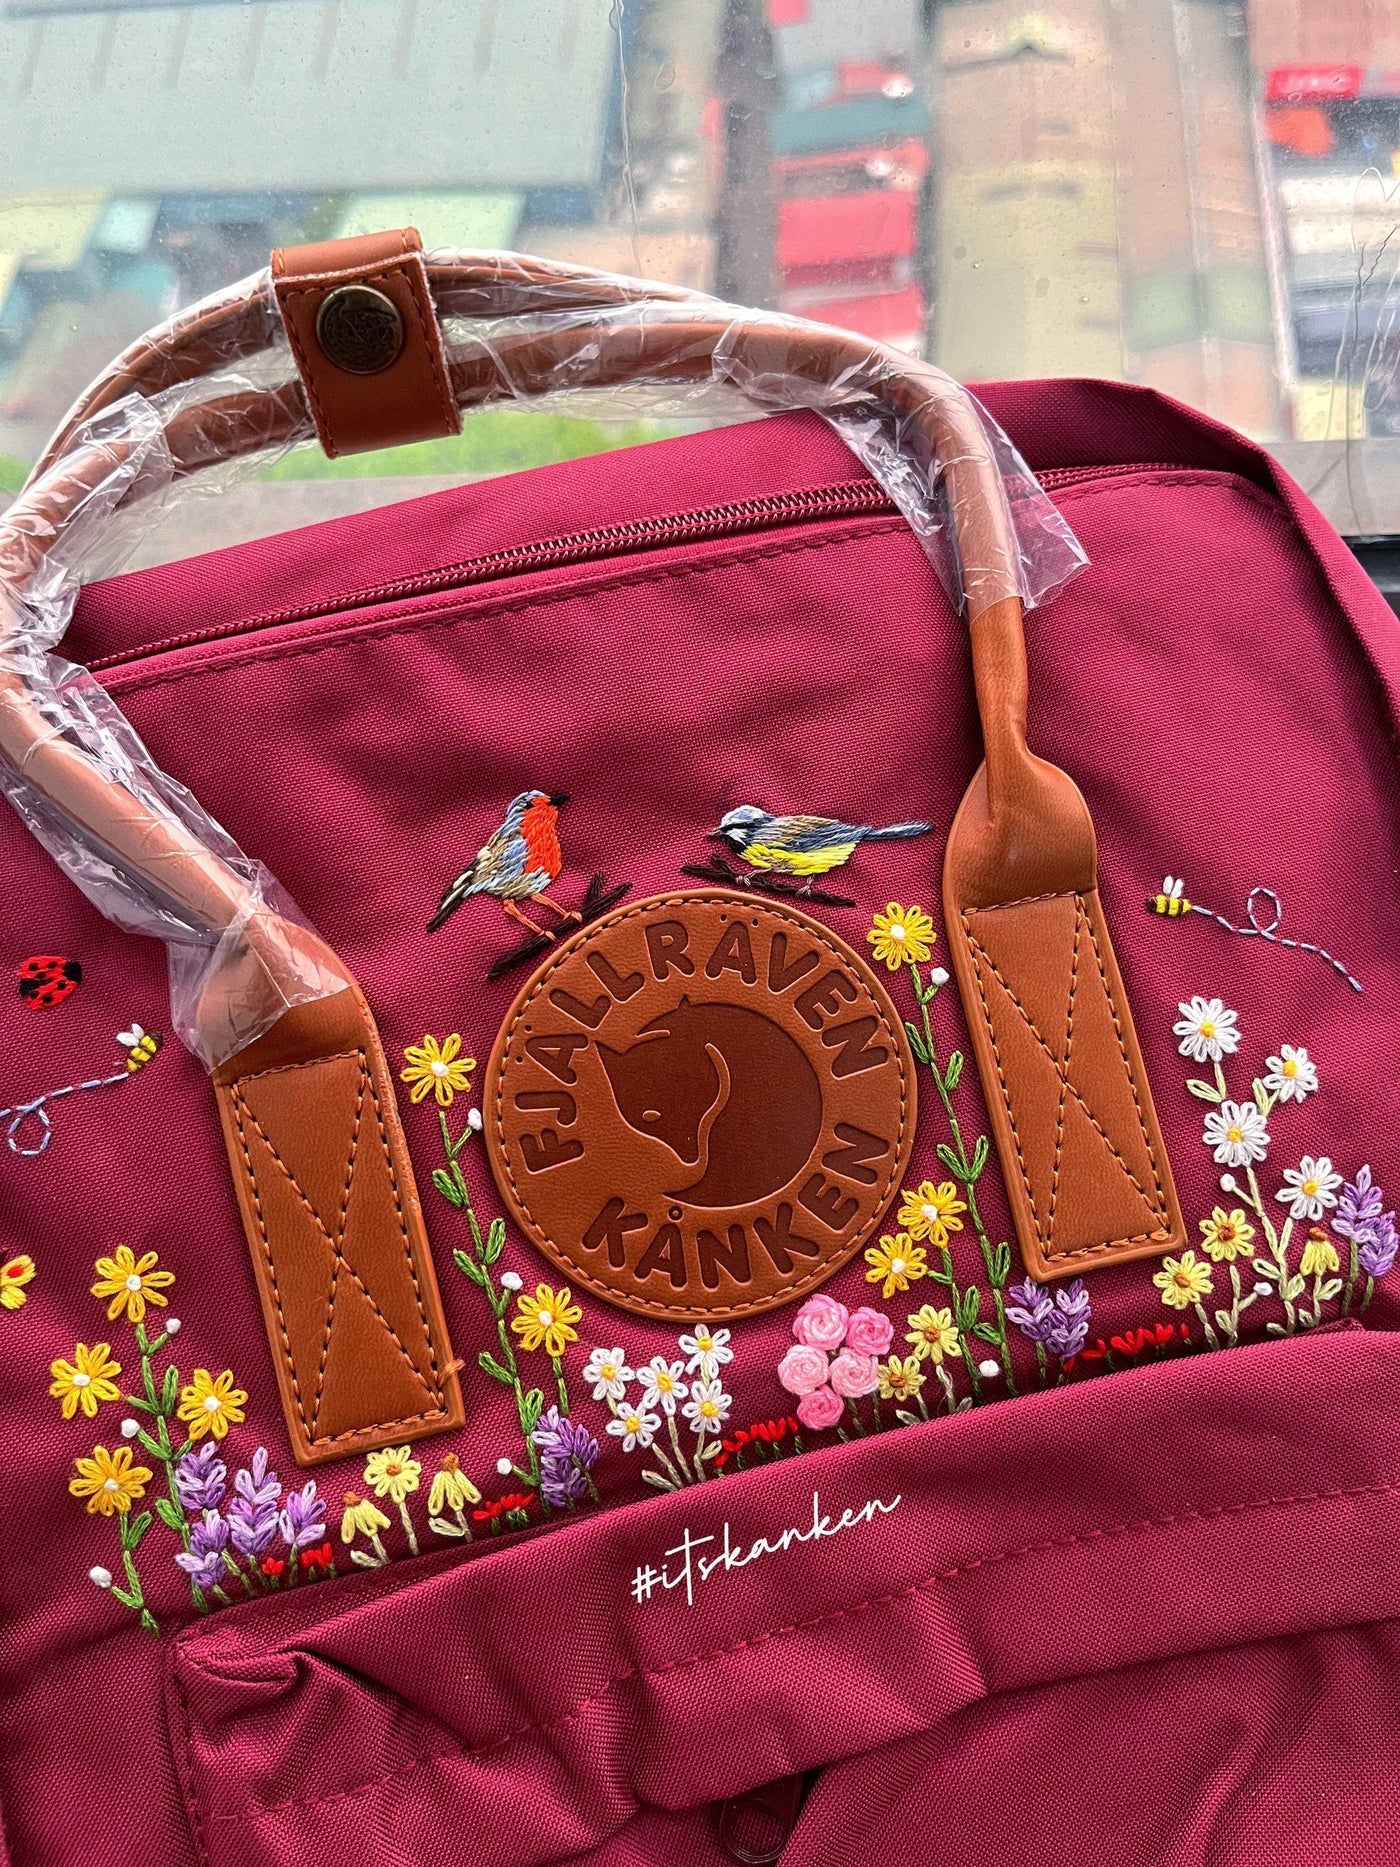 Kaken Backpack Colorful Flowers Embroidery